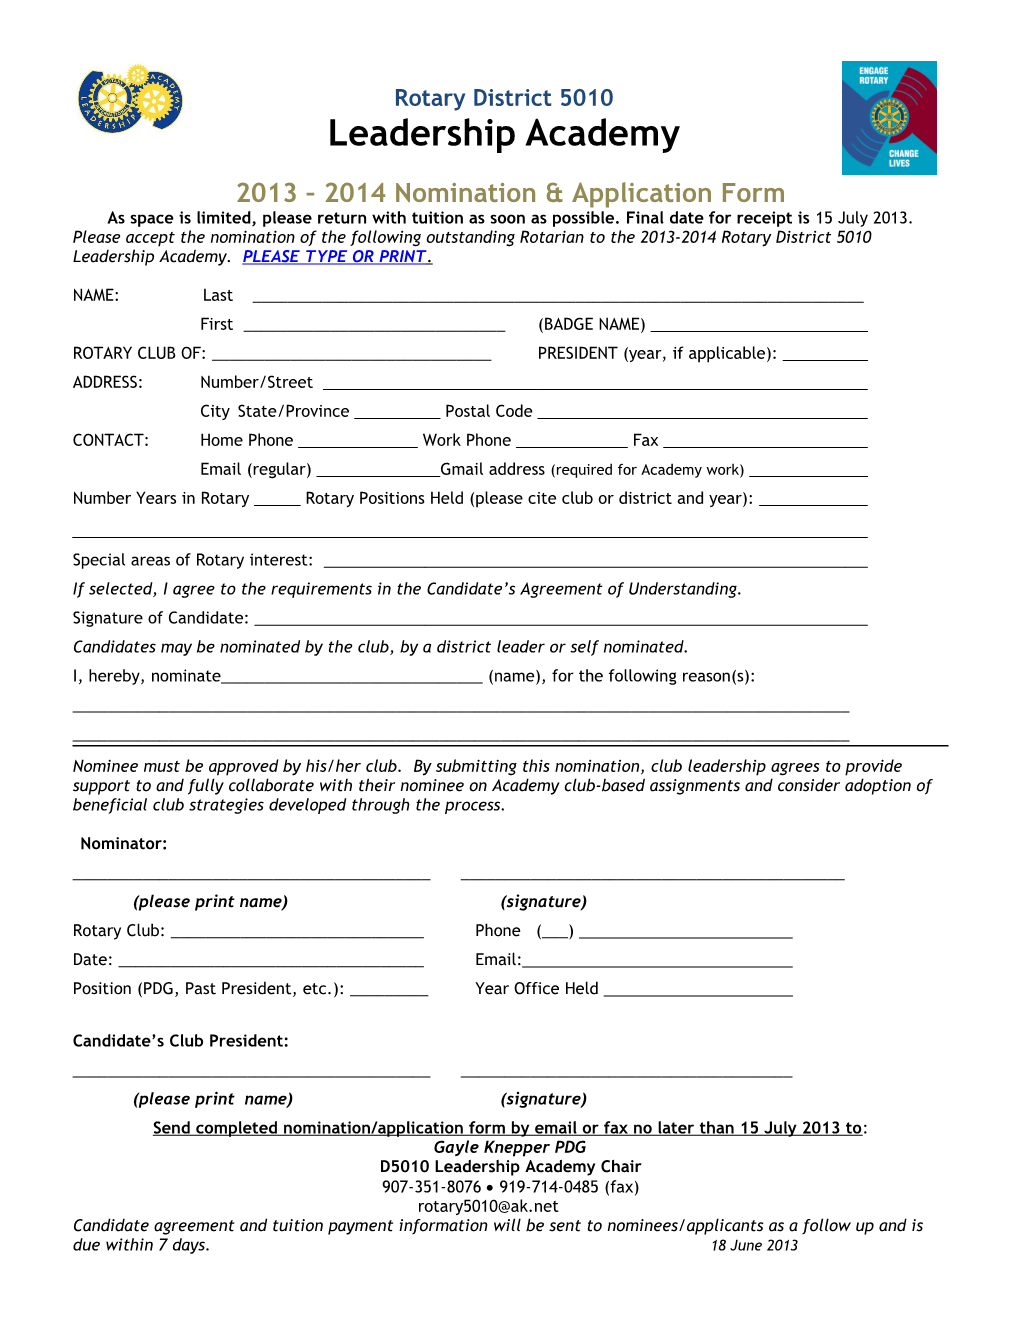 2013 2014 Nomination & Application Form